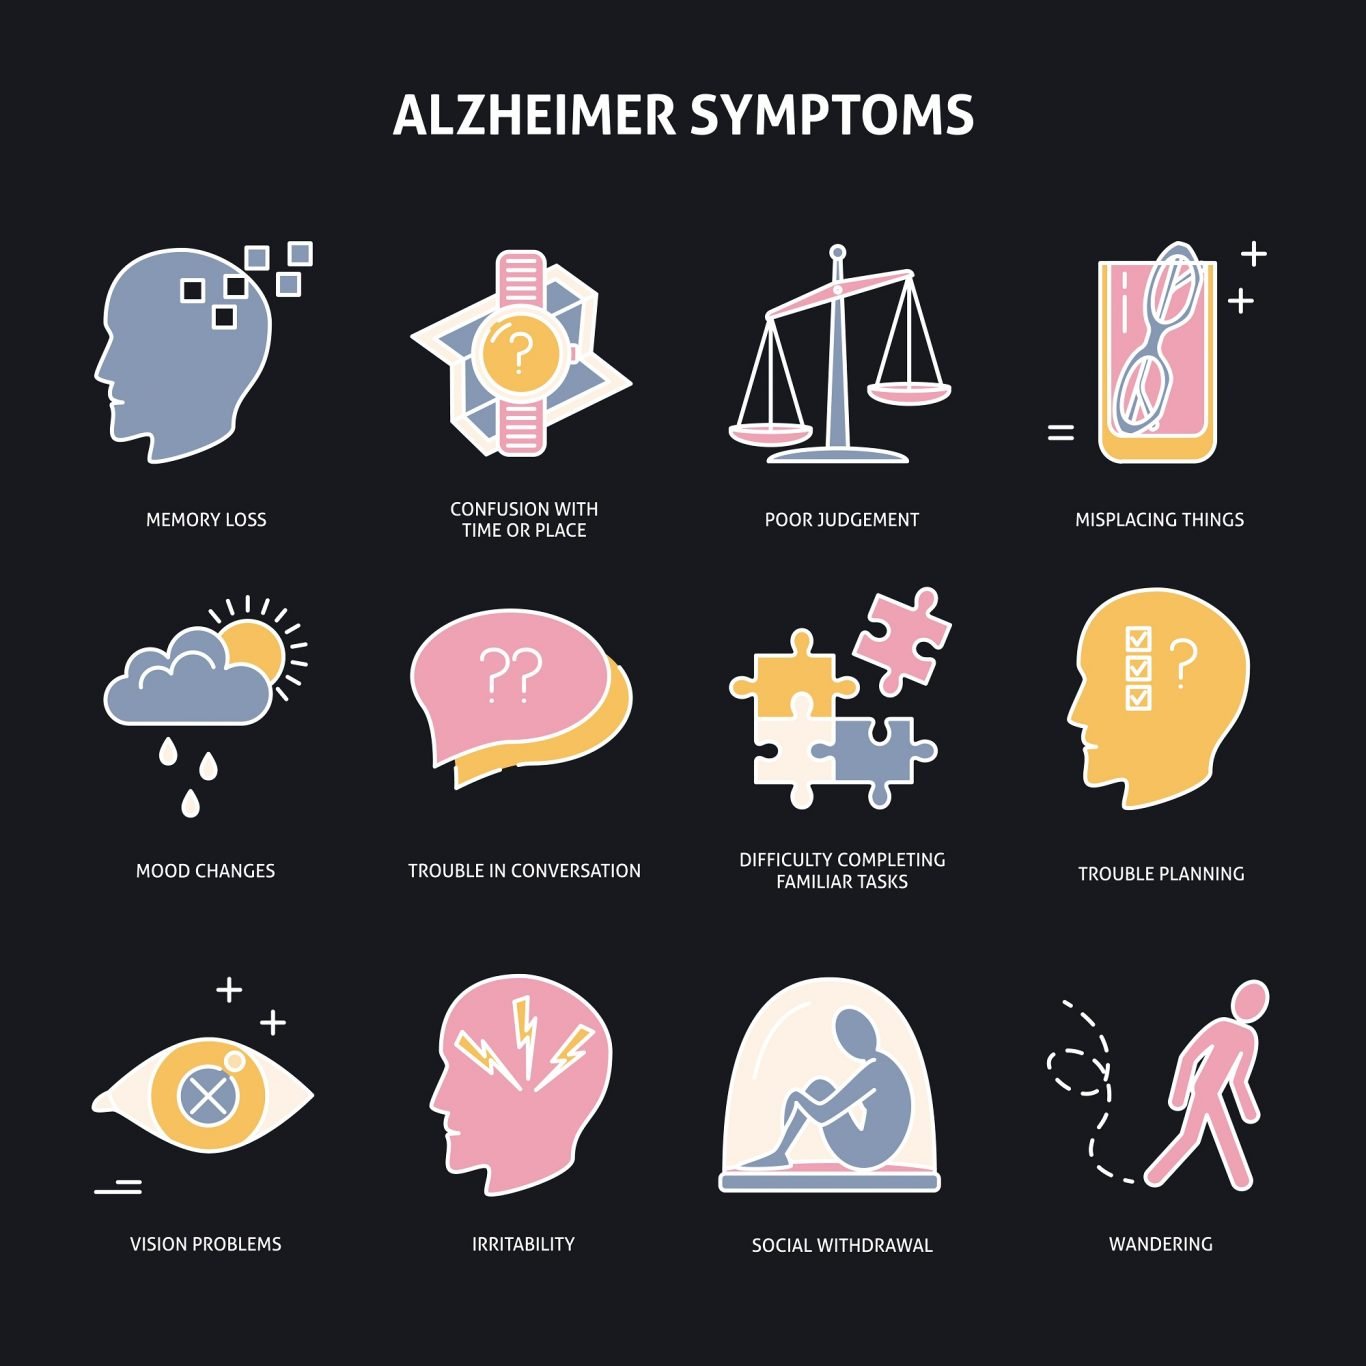 Warning signs of Alzheimerâs disease